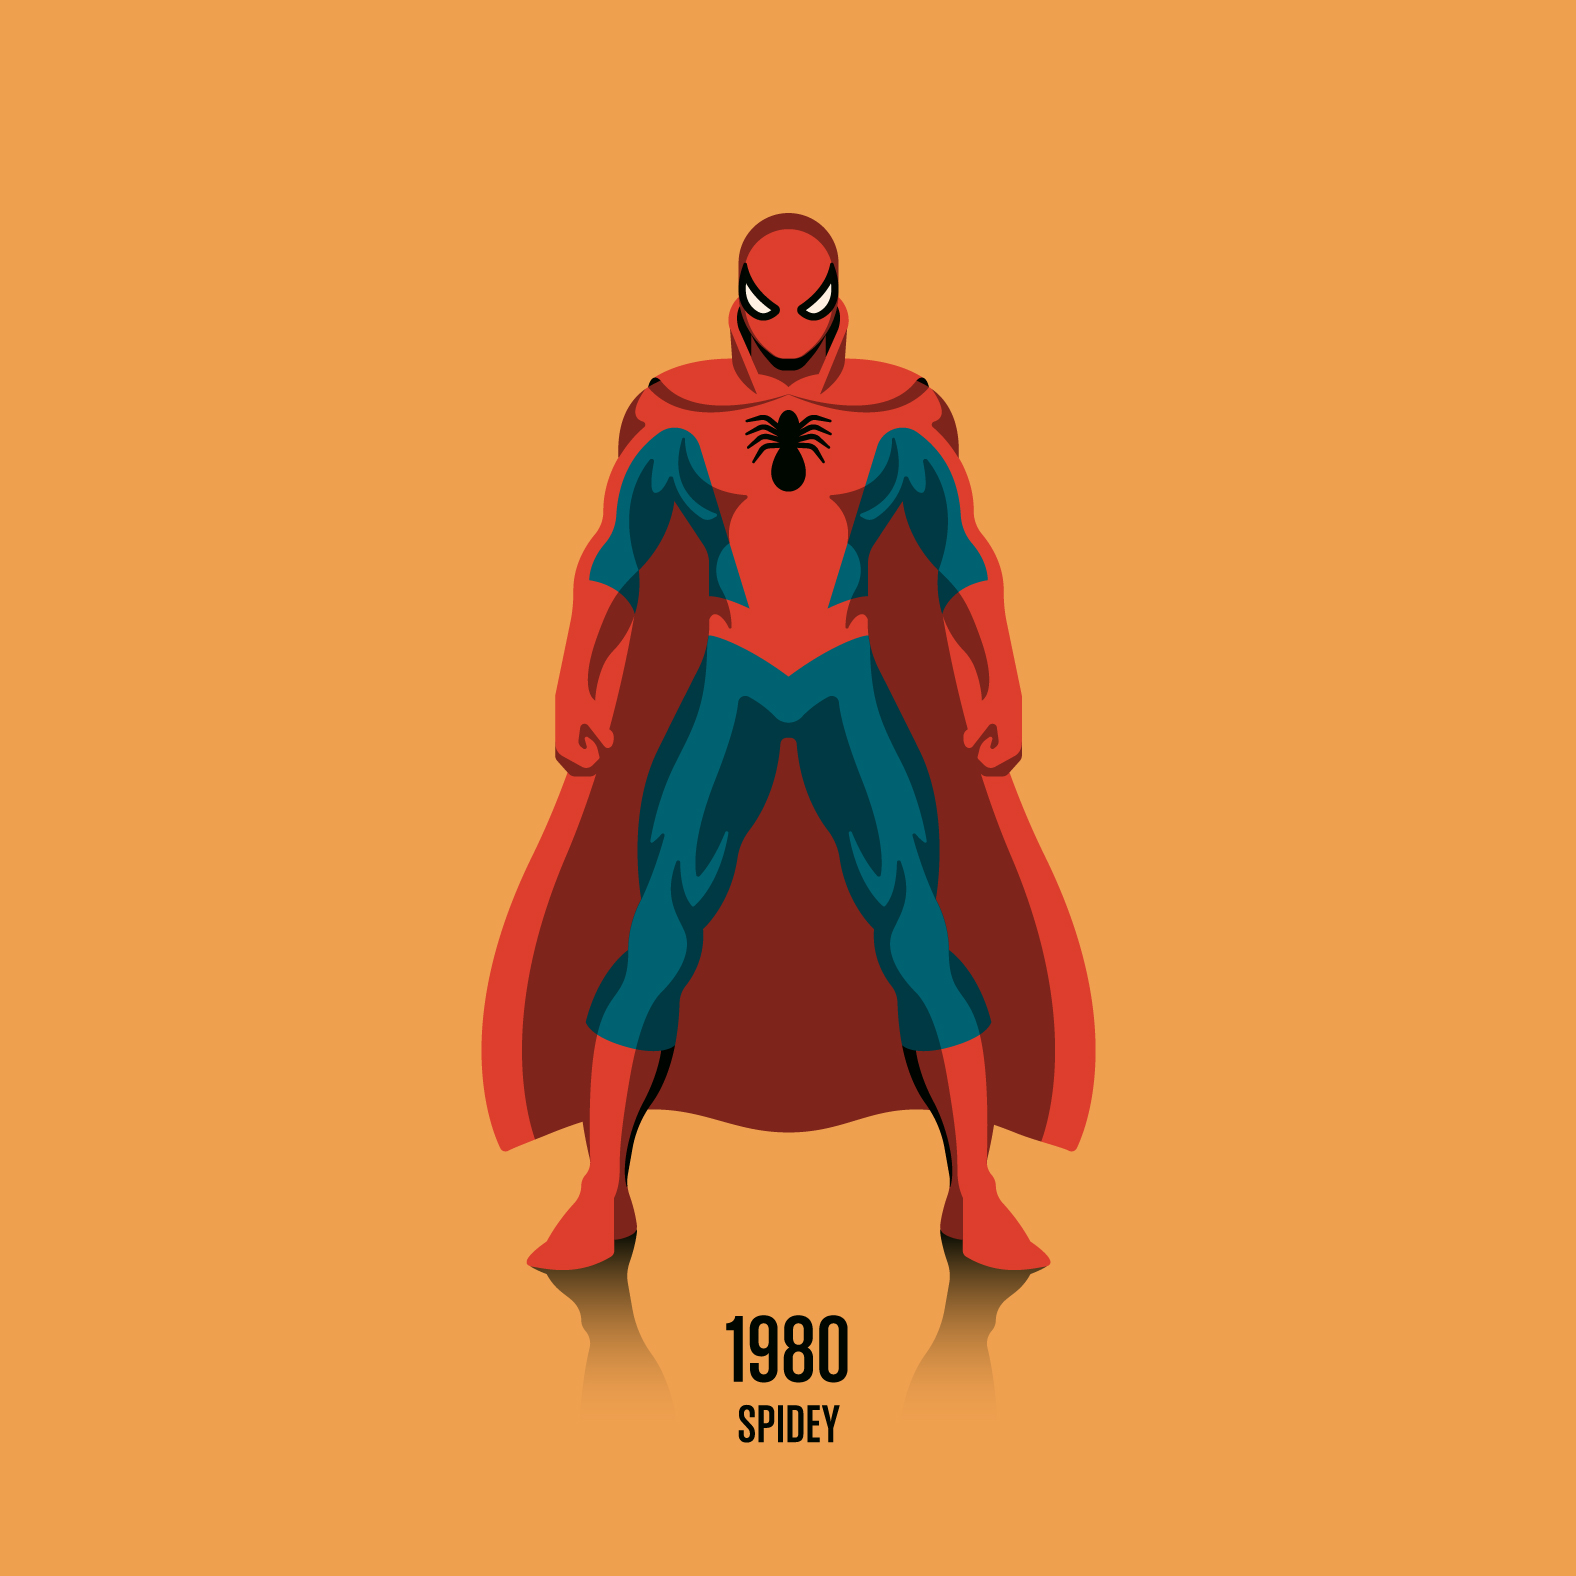 Mondo Spider-verse Poster — DKNG